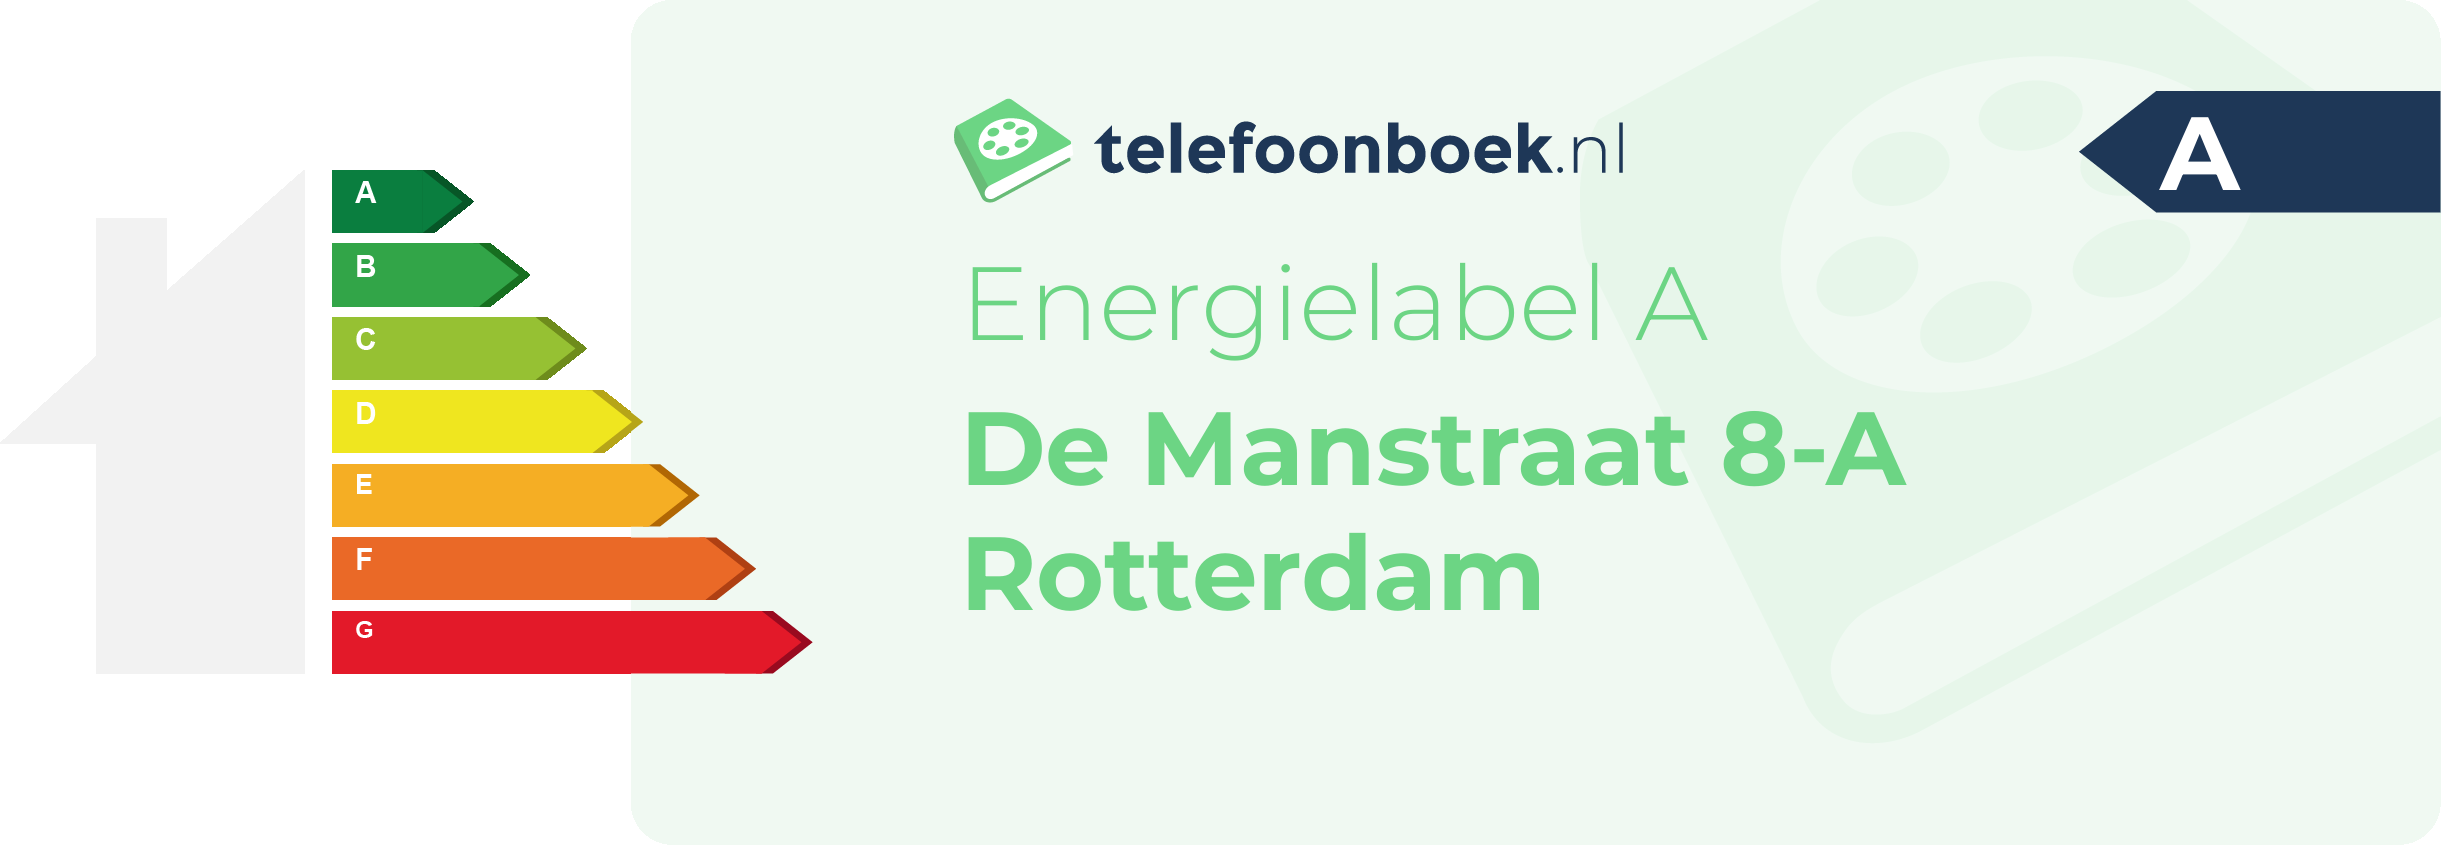 Energielabel De Manstraat 8-A Rotterdam